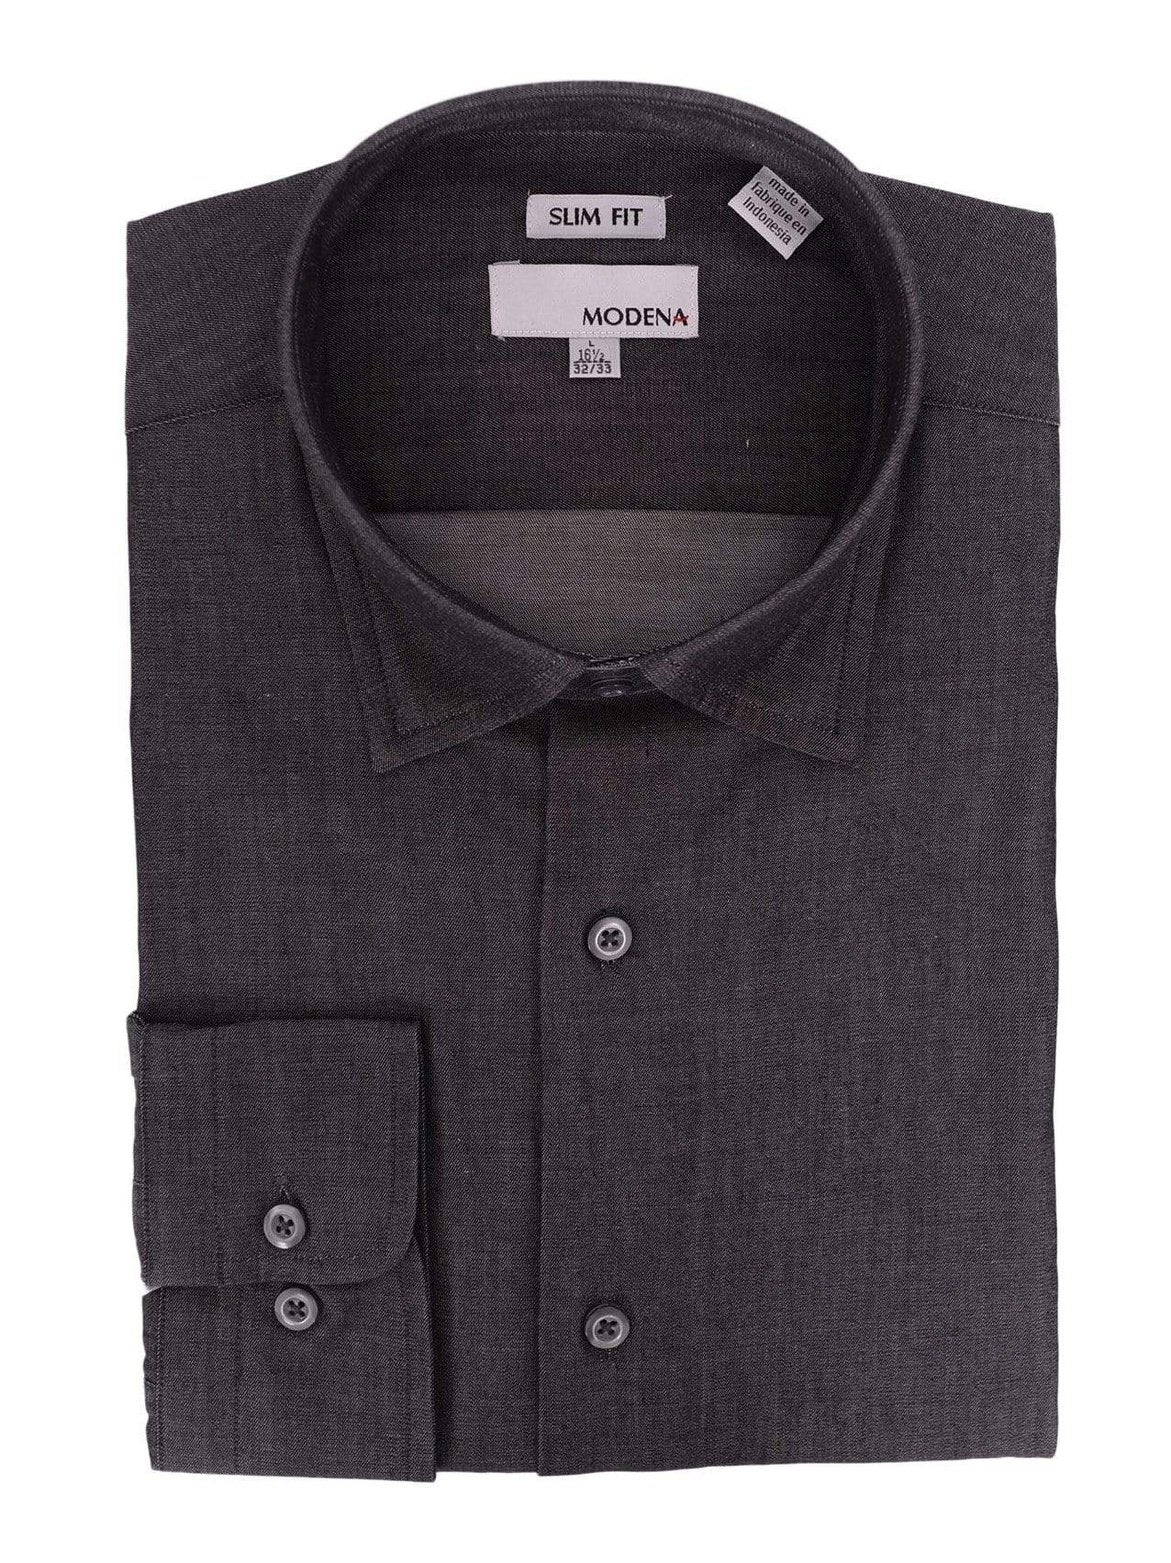 Modena Sale Shirts 16 1/2 32/33 Mens Slim Fit Black Textured Spread Collar Cotton Blend Dress Shirt